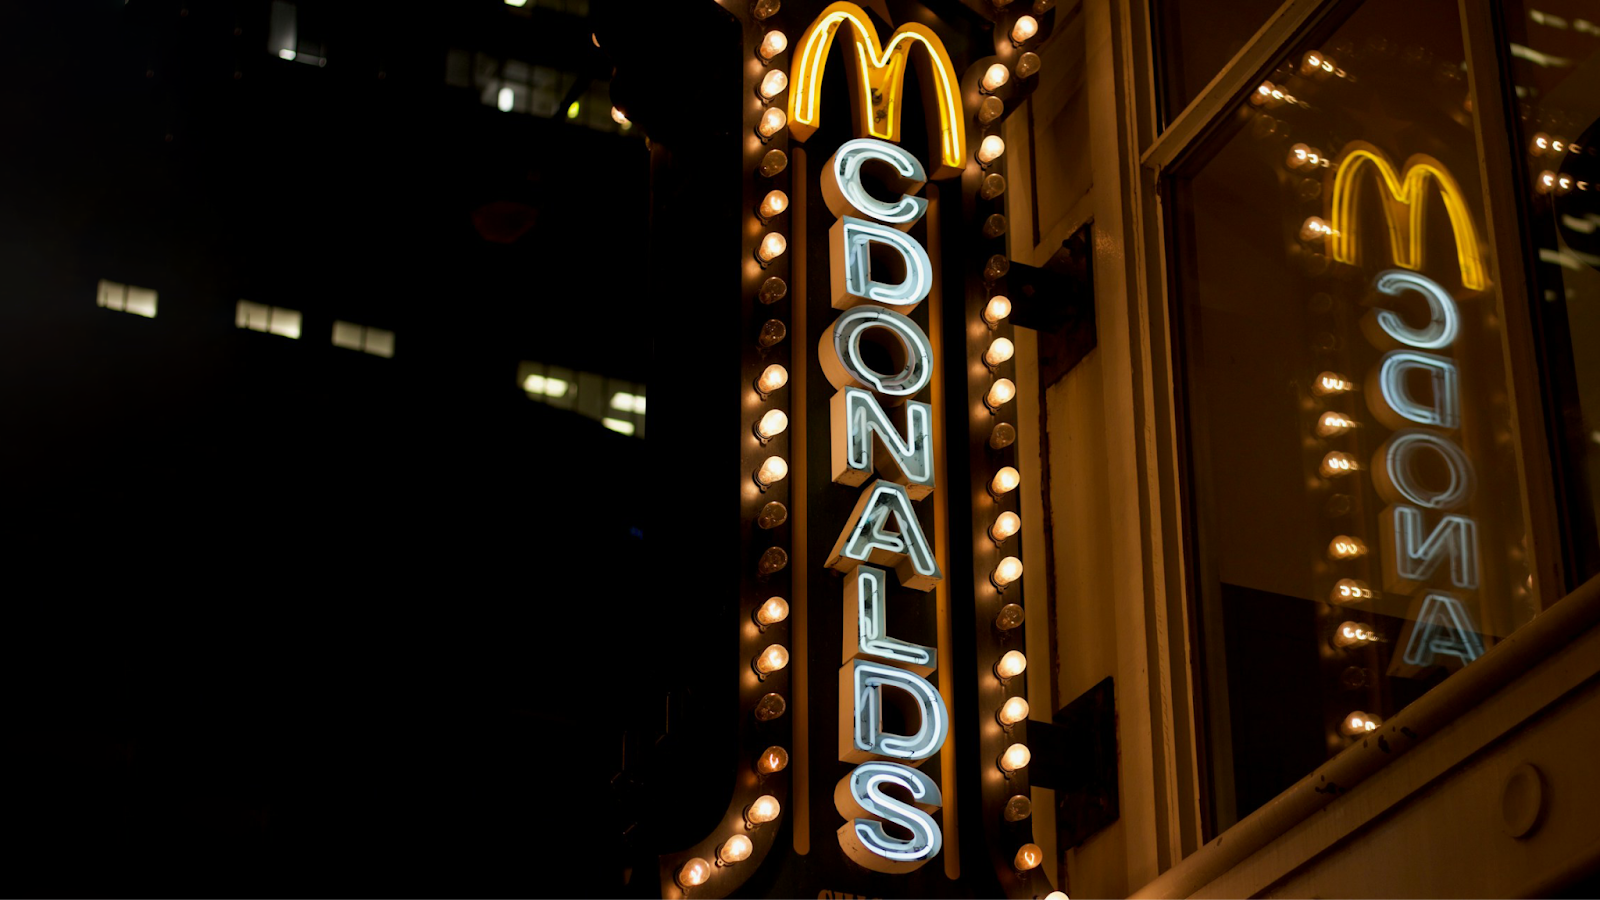 mcdonalds logo in street
